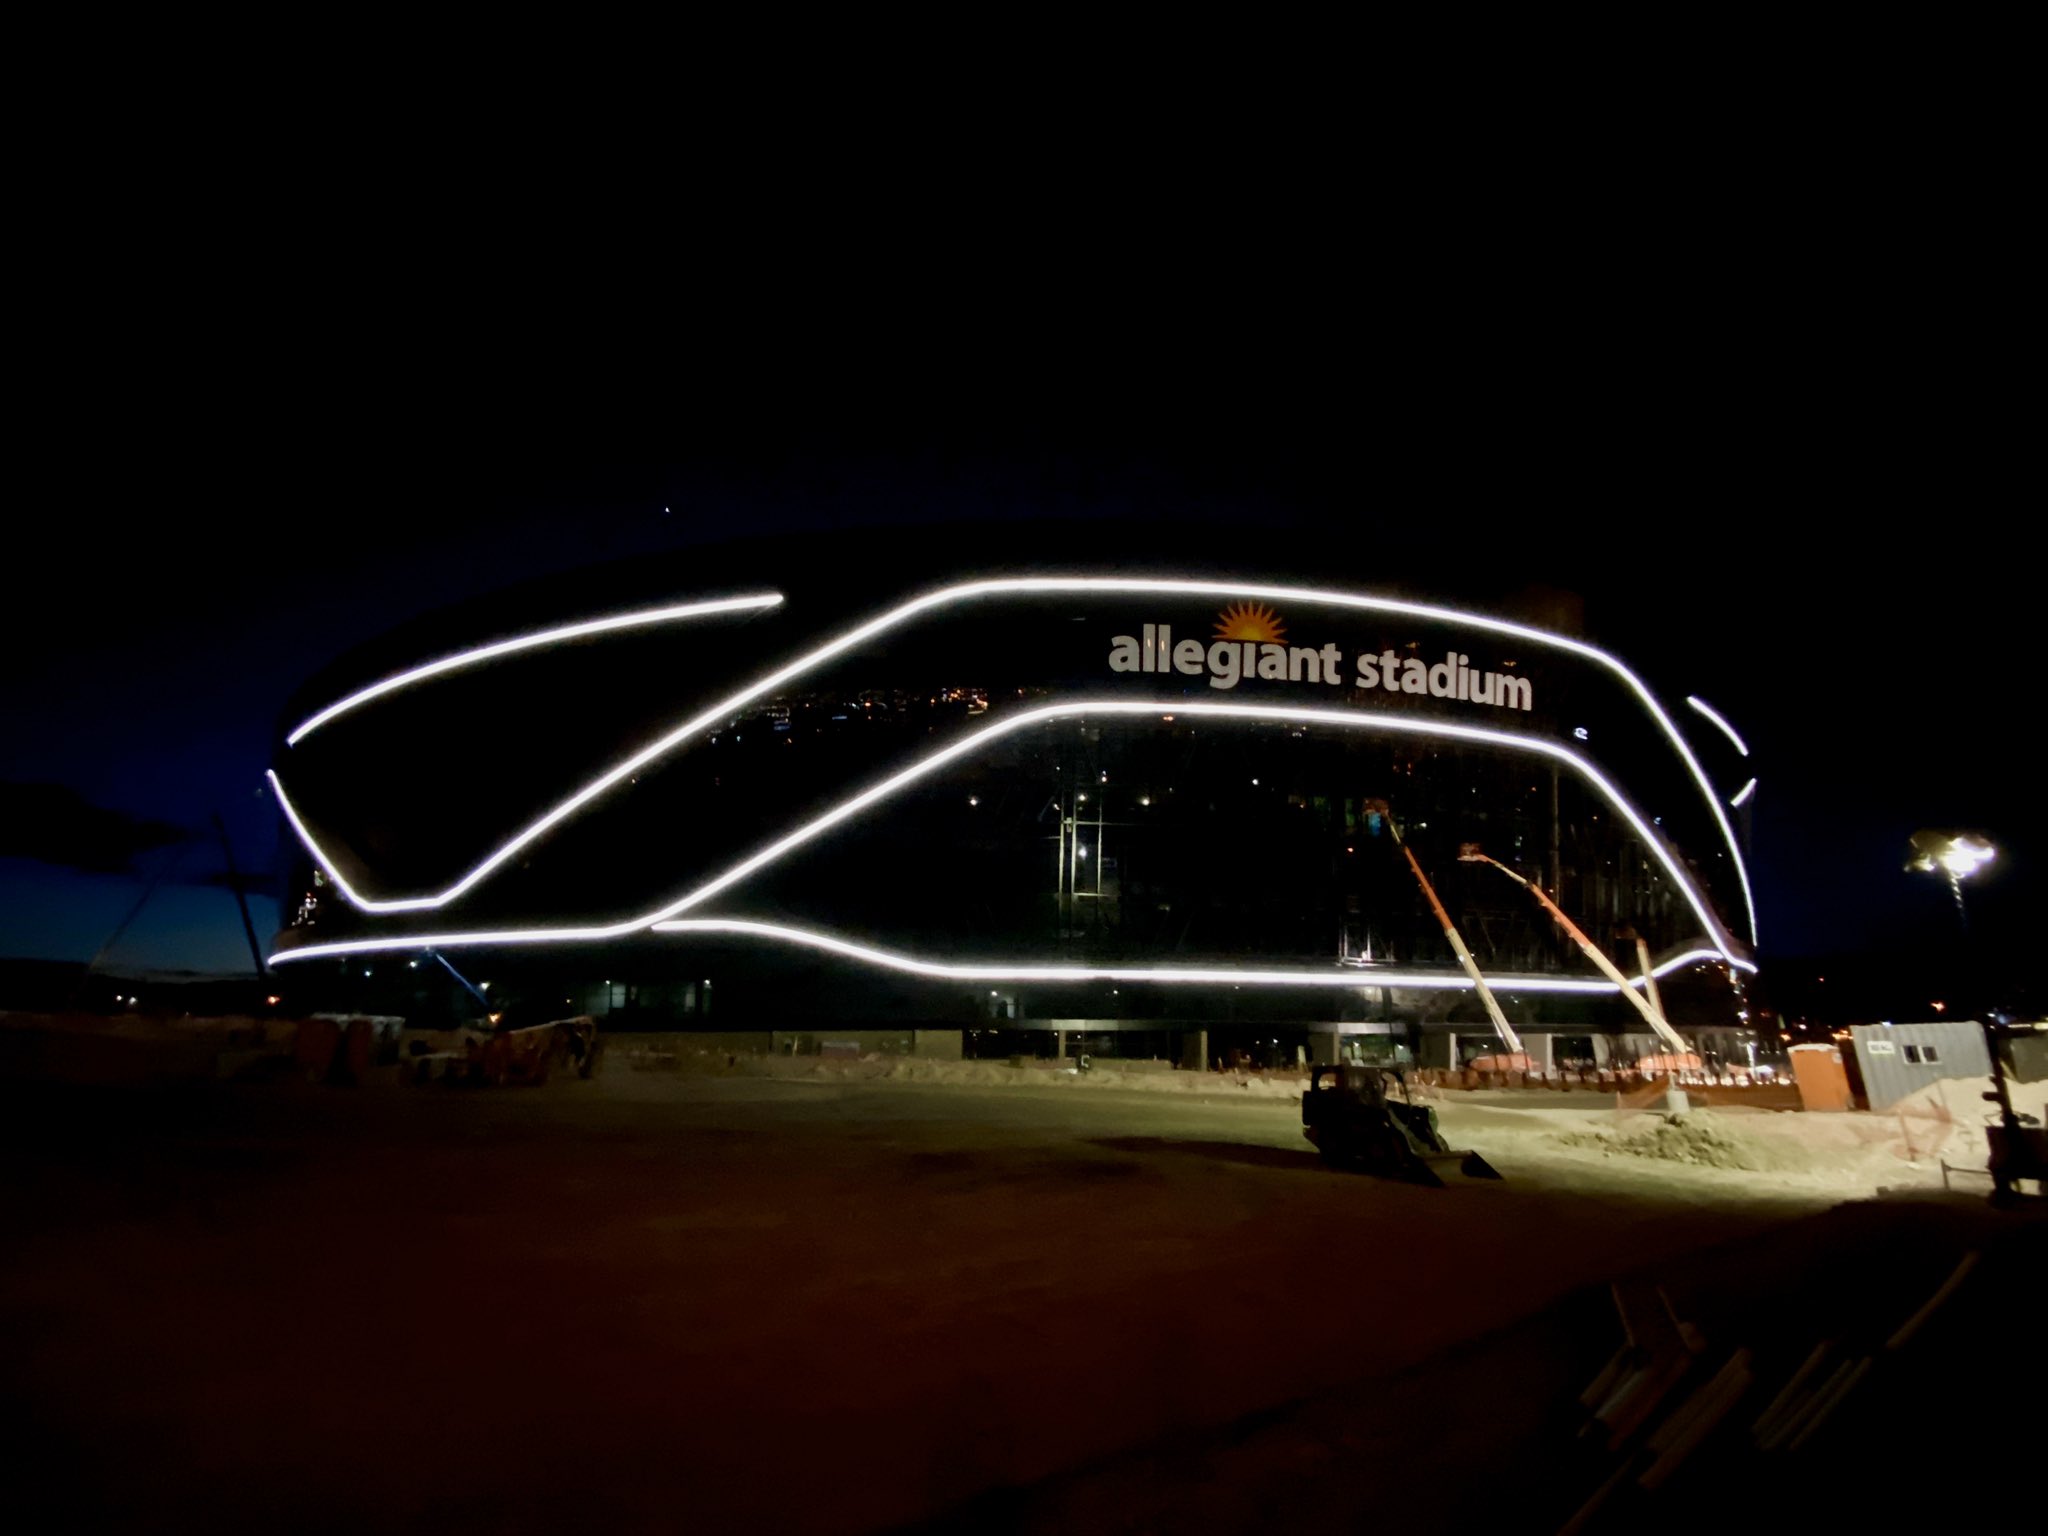 Mick Akers at Allegiant Stadium testing out the light ribbon around the stadium. #vegas #raiders #stadium